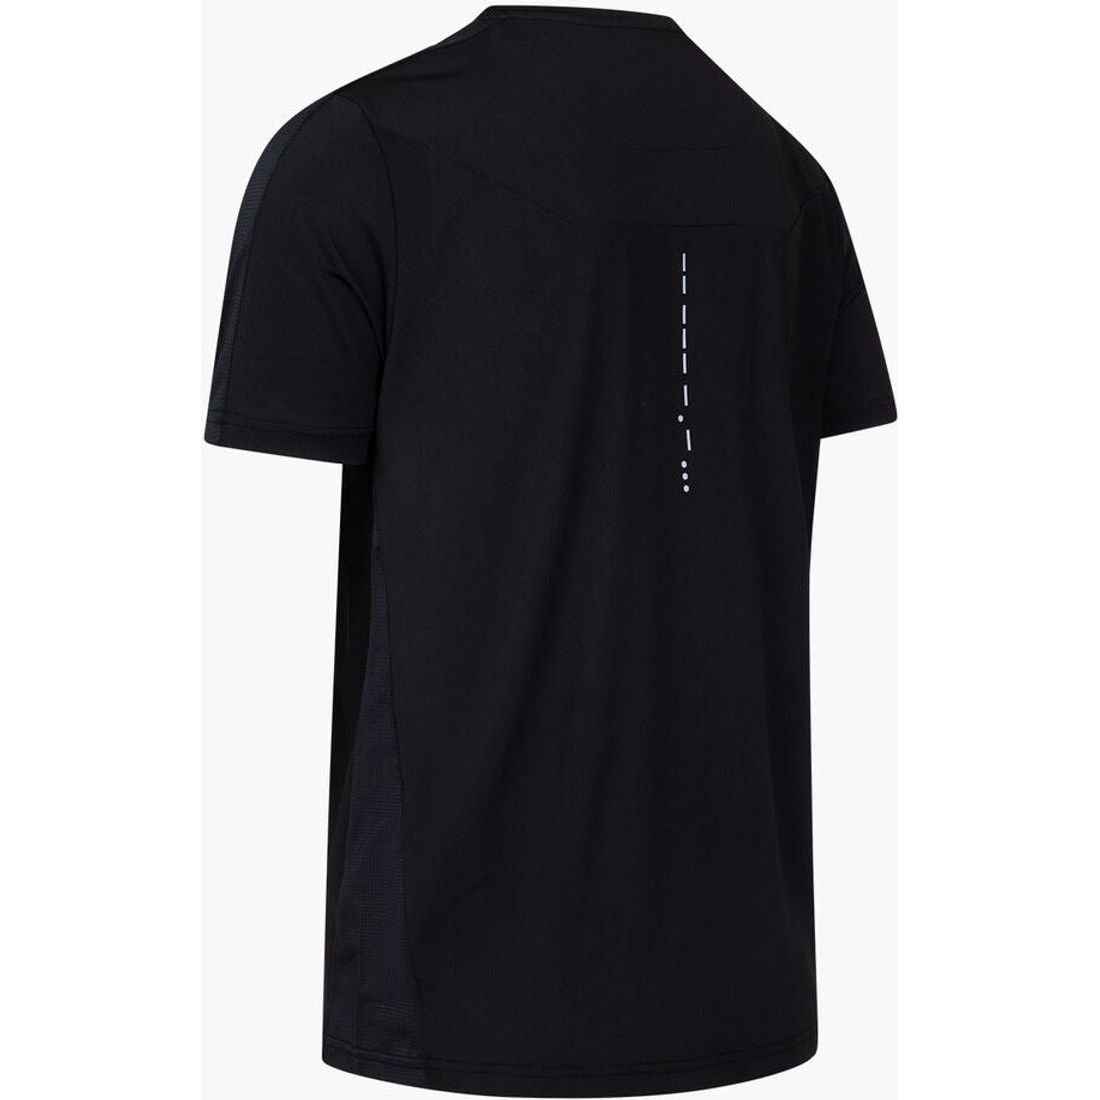 Cruyff Montserrat Limits T-Shirt MenAlive & Dirty 